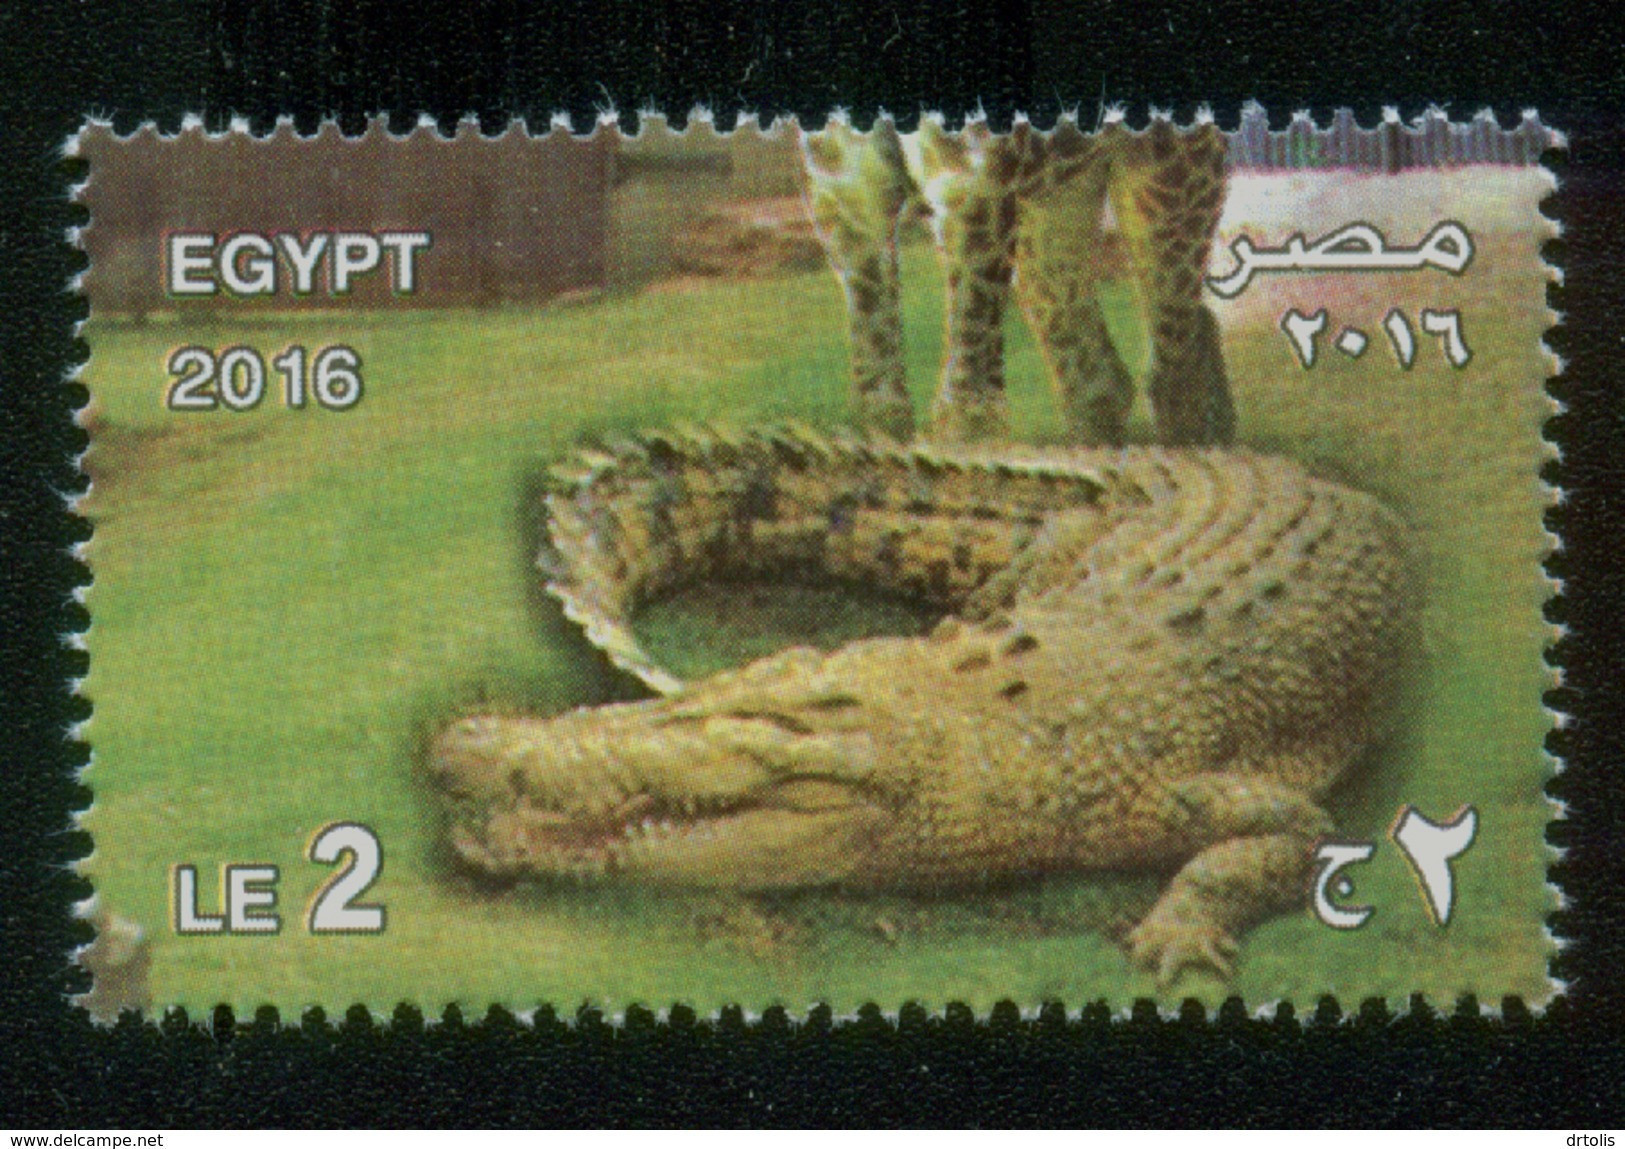 EGYPT / 2016 / GIZA ZOO ; 125 YEARS / ANIMALS / CROCODILE / MNH / VF - Neufs